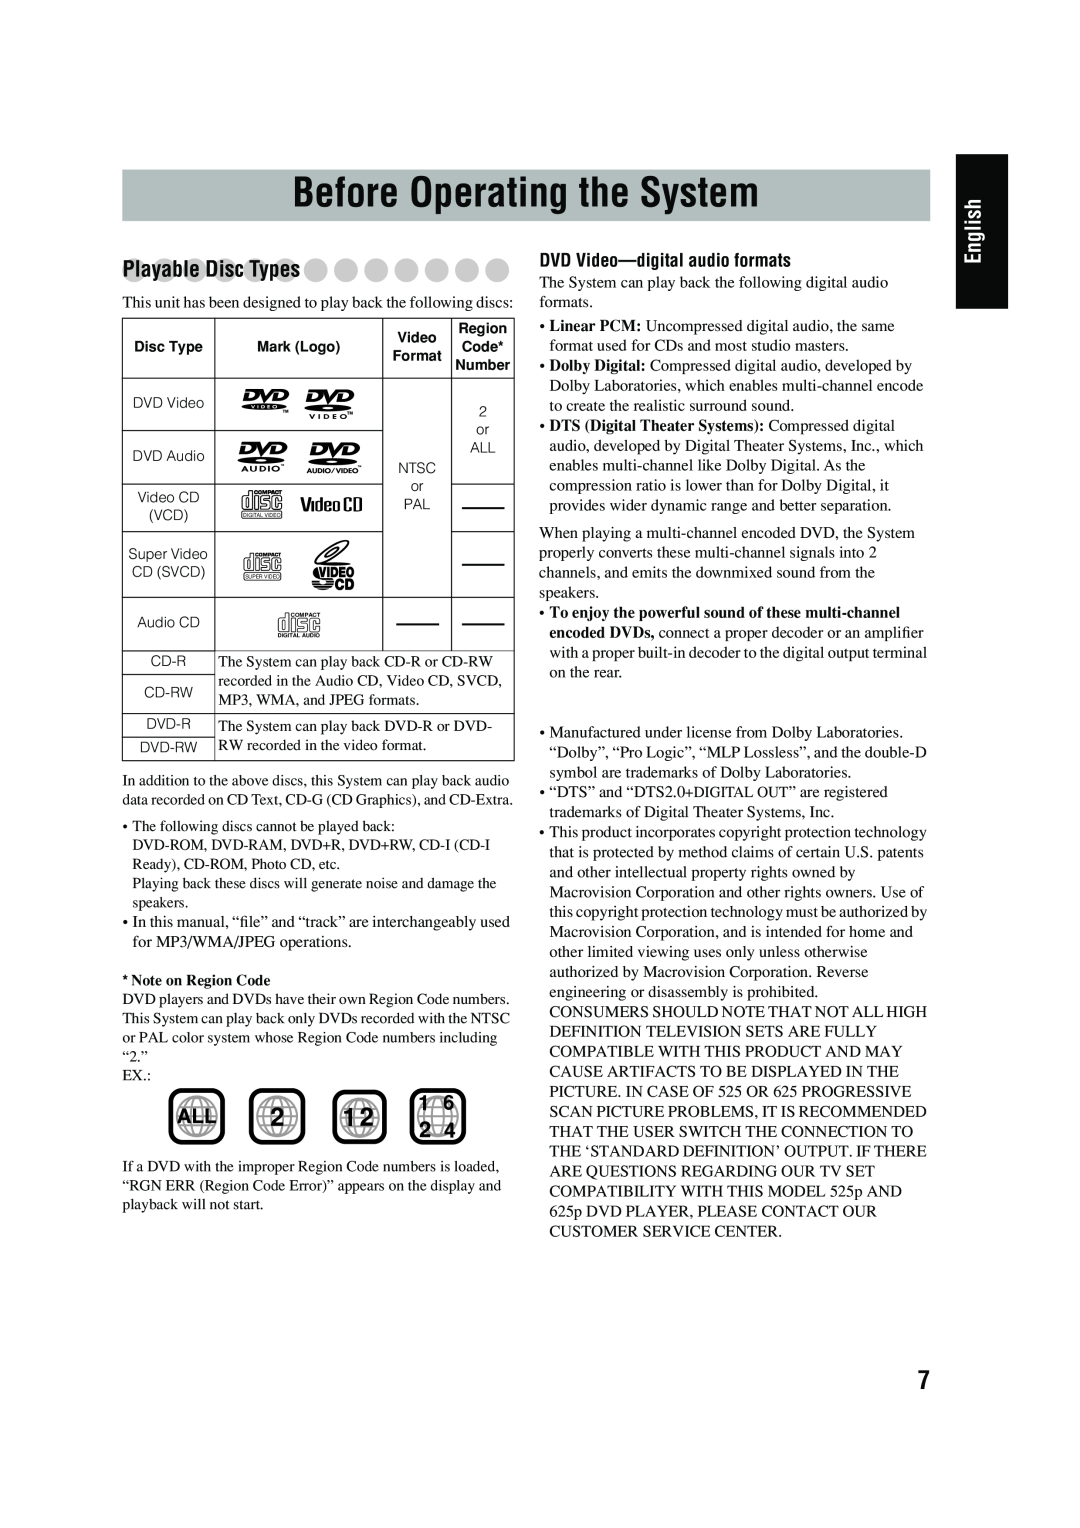 JVC UX-P450 Before Operating the System, English, Playable Disc Types, DVD Video-digitalaudio formats, Mark Logo, Ntsc 